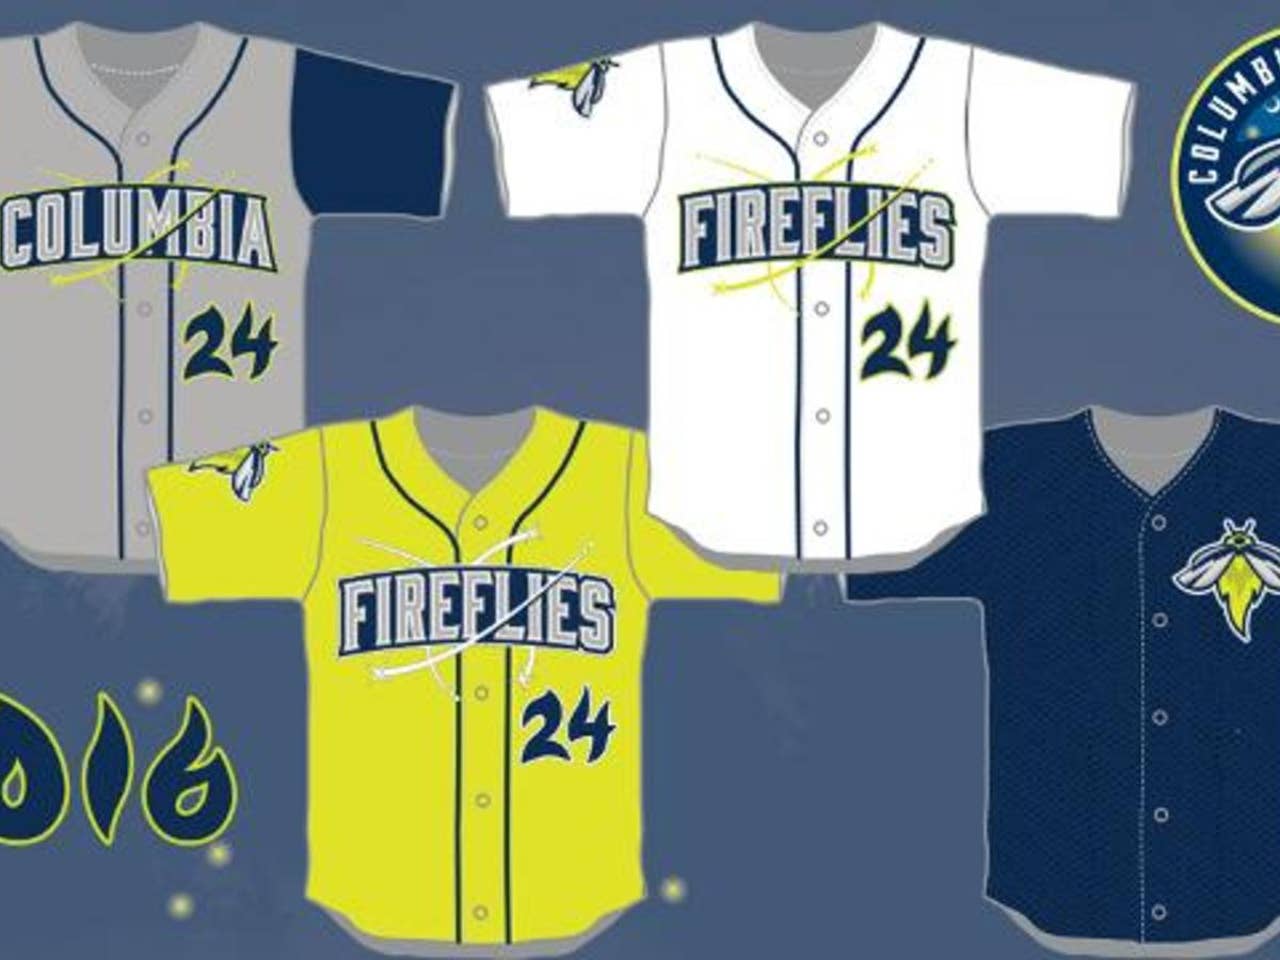 Minor League Baseball Team Unveils Glow-in-the-Dark Uniforms